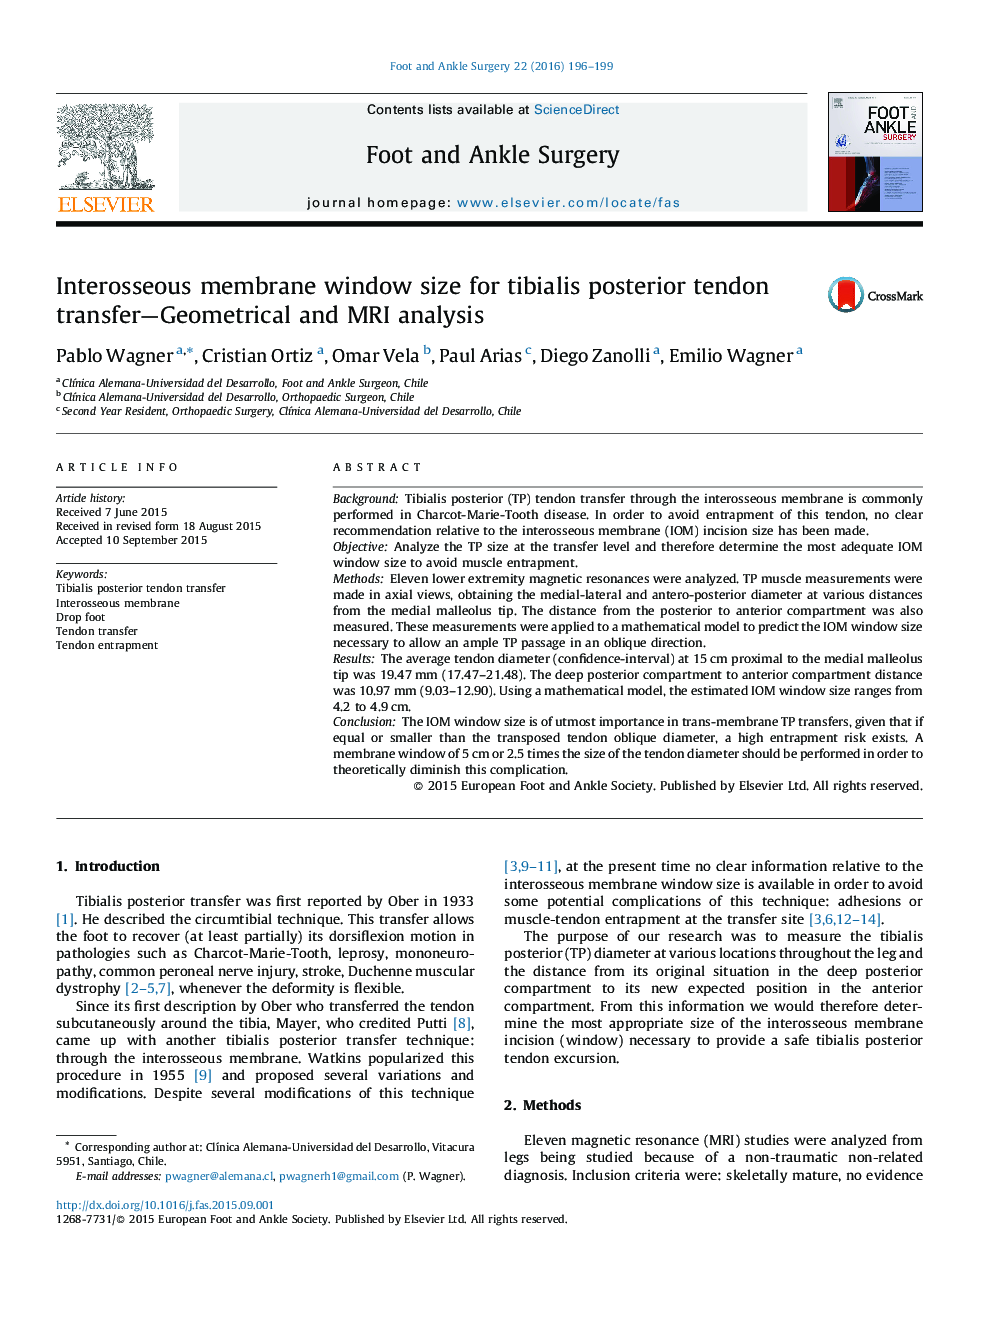 Interosseous membrane window size for tibialis posterior tendon transfer—Geometrical and MRI analysis